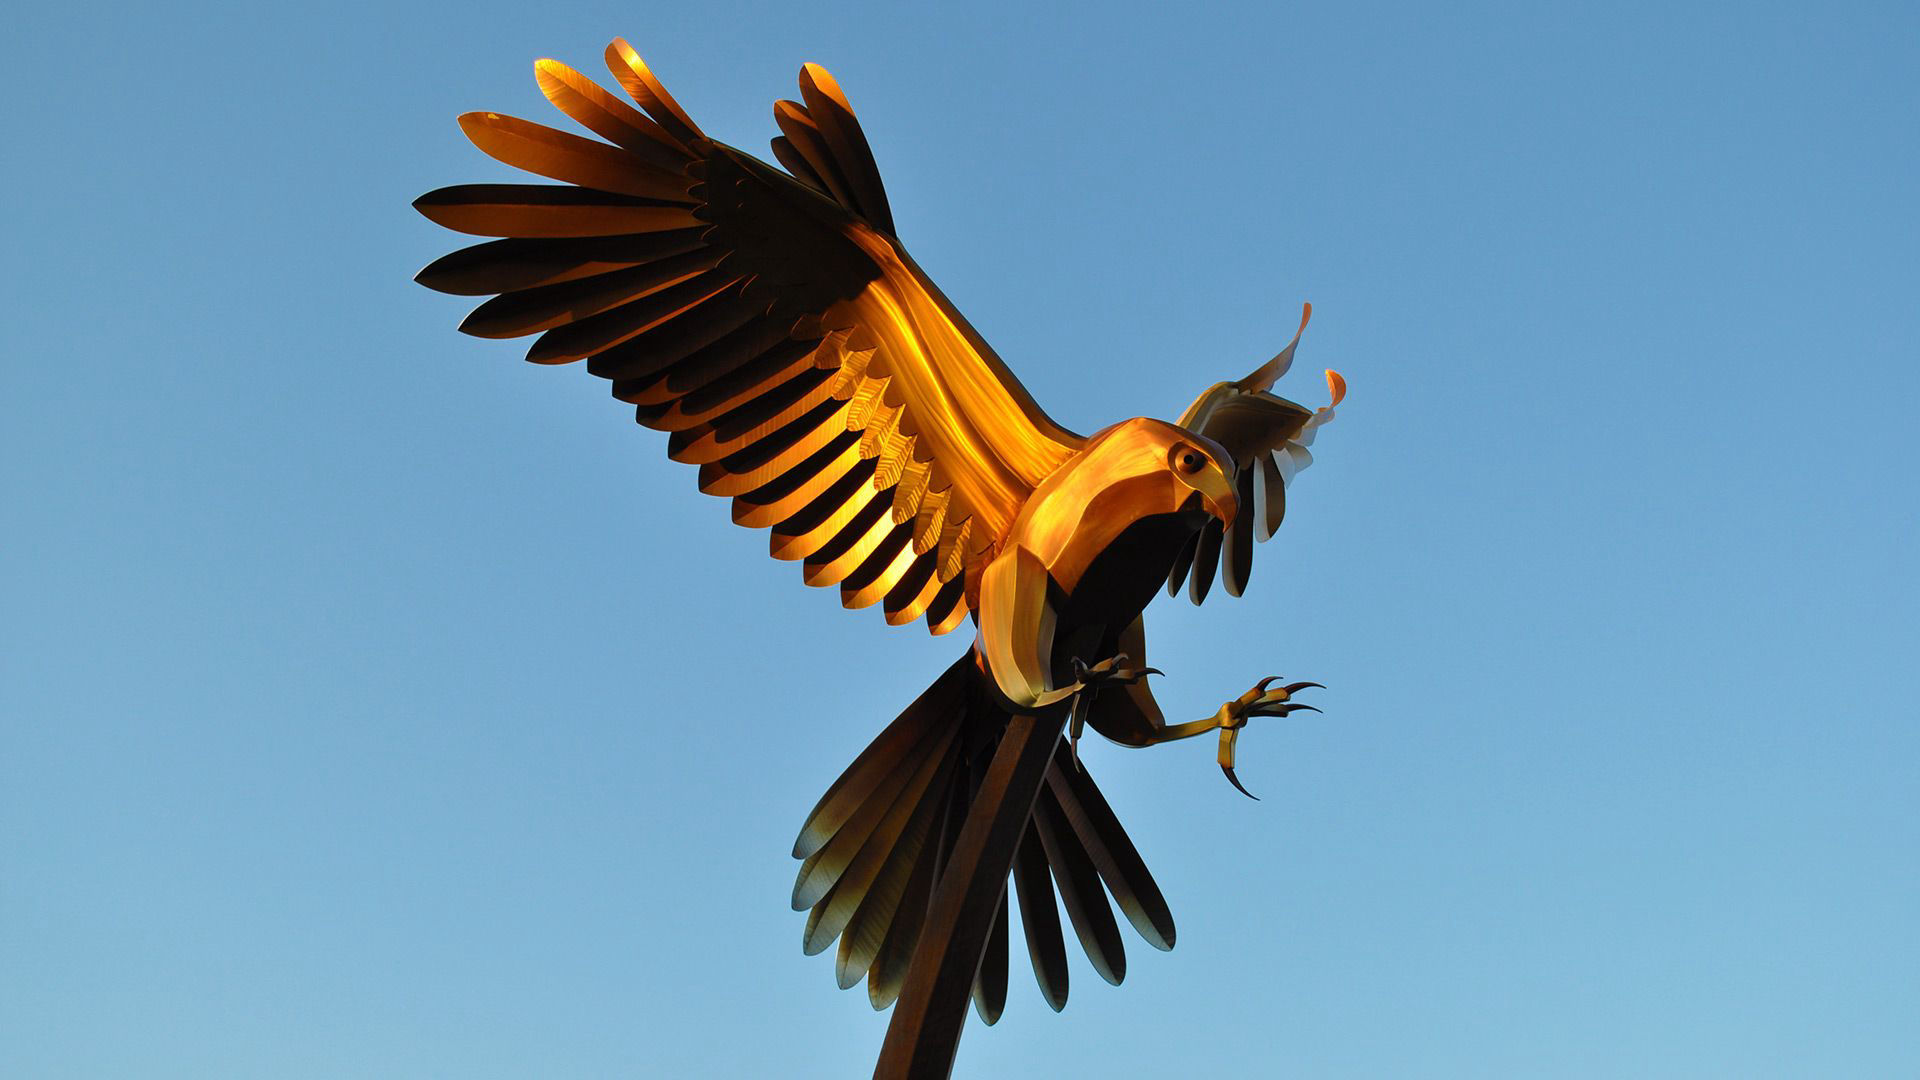 corten and stainless steel public art hawk sculpture by Heath Satow El Paso, TX